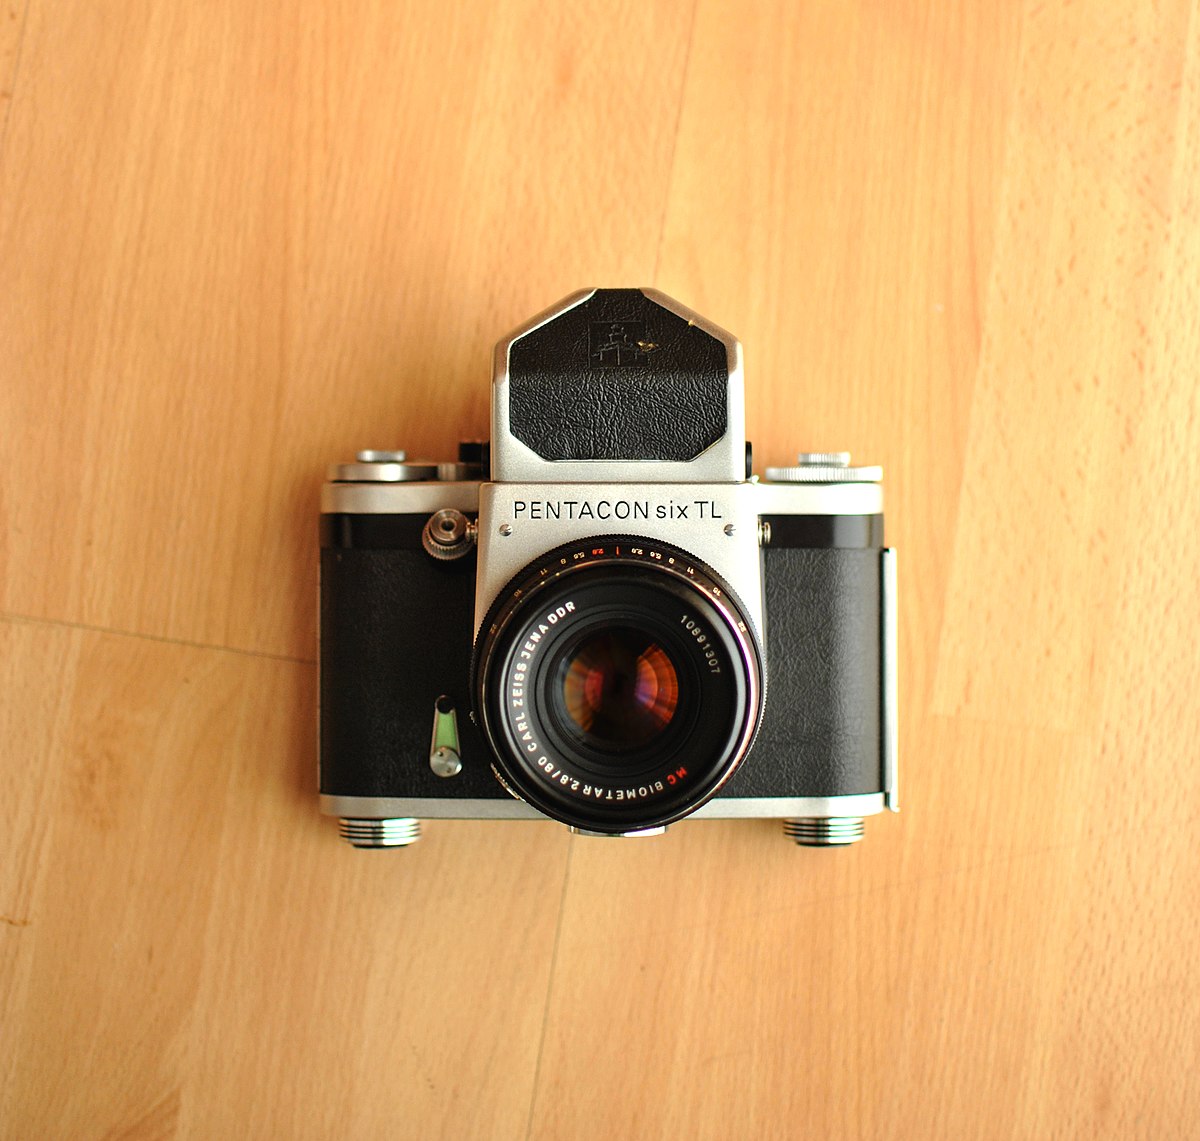 File:Pentacon six TL medium format SLR camera with Carl Zeiss